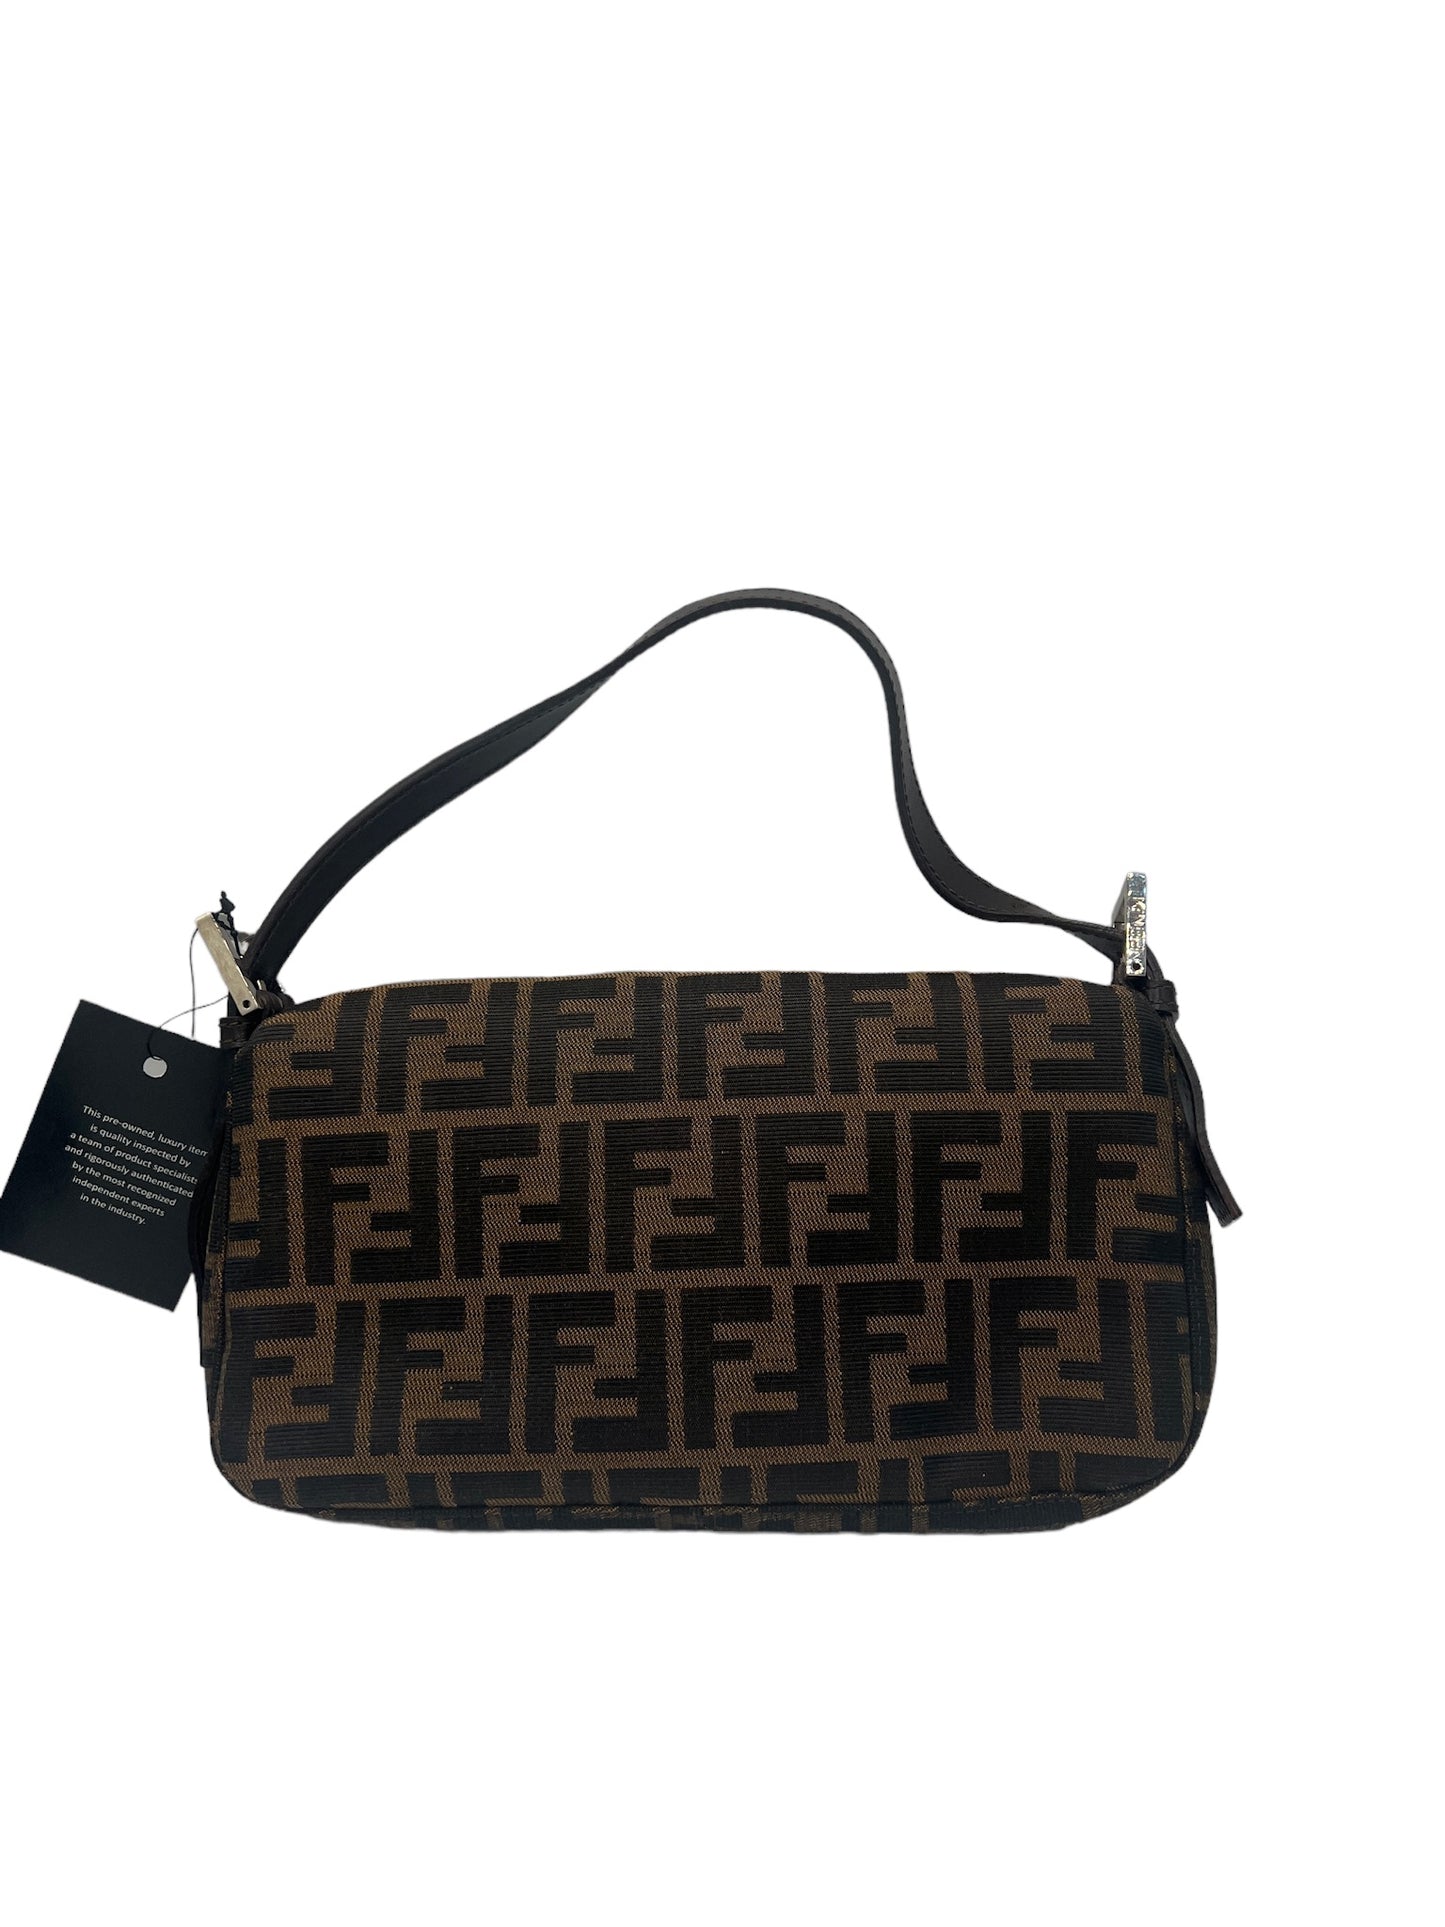 FENDI - Baguette Handbag